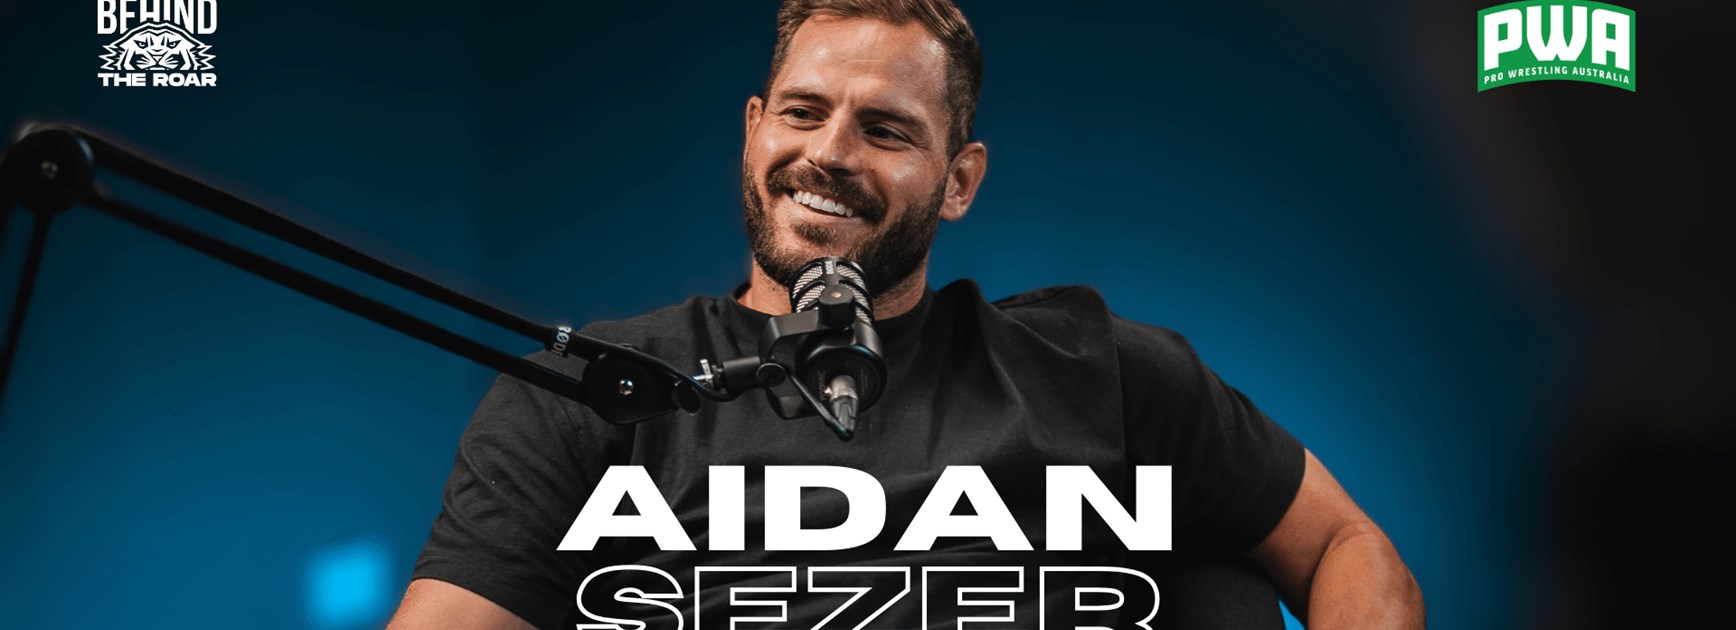 Podcast BTR: Episode 44 with Aidan Sezer